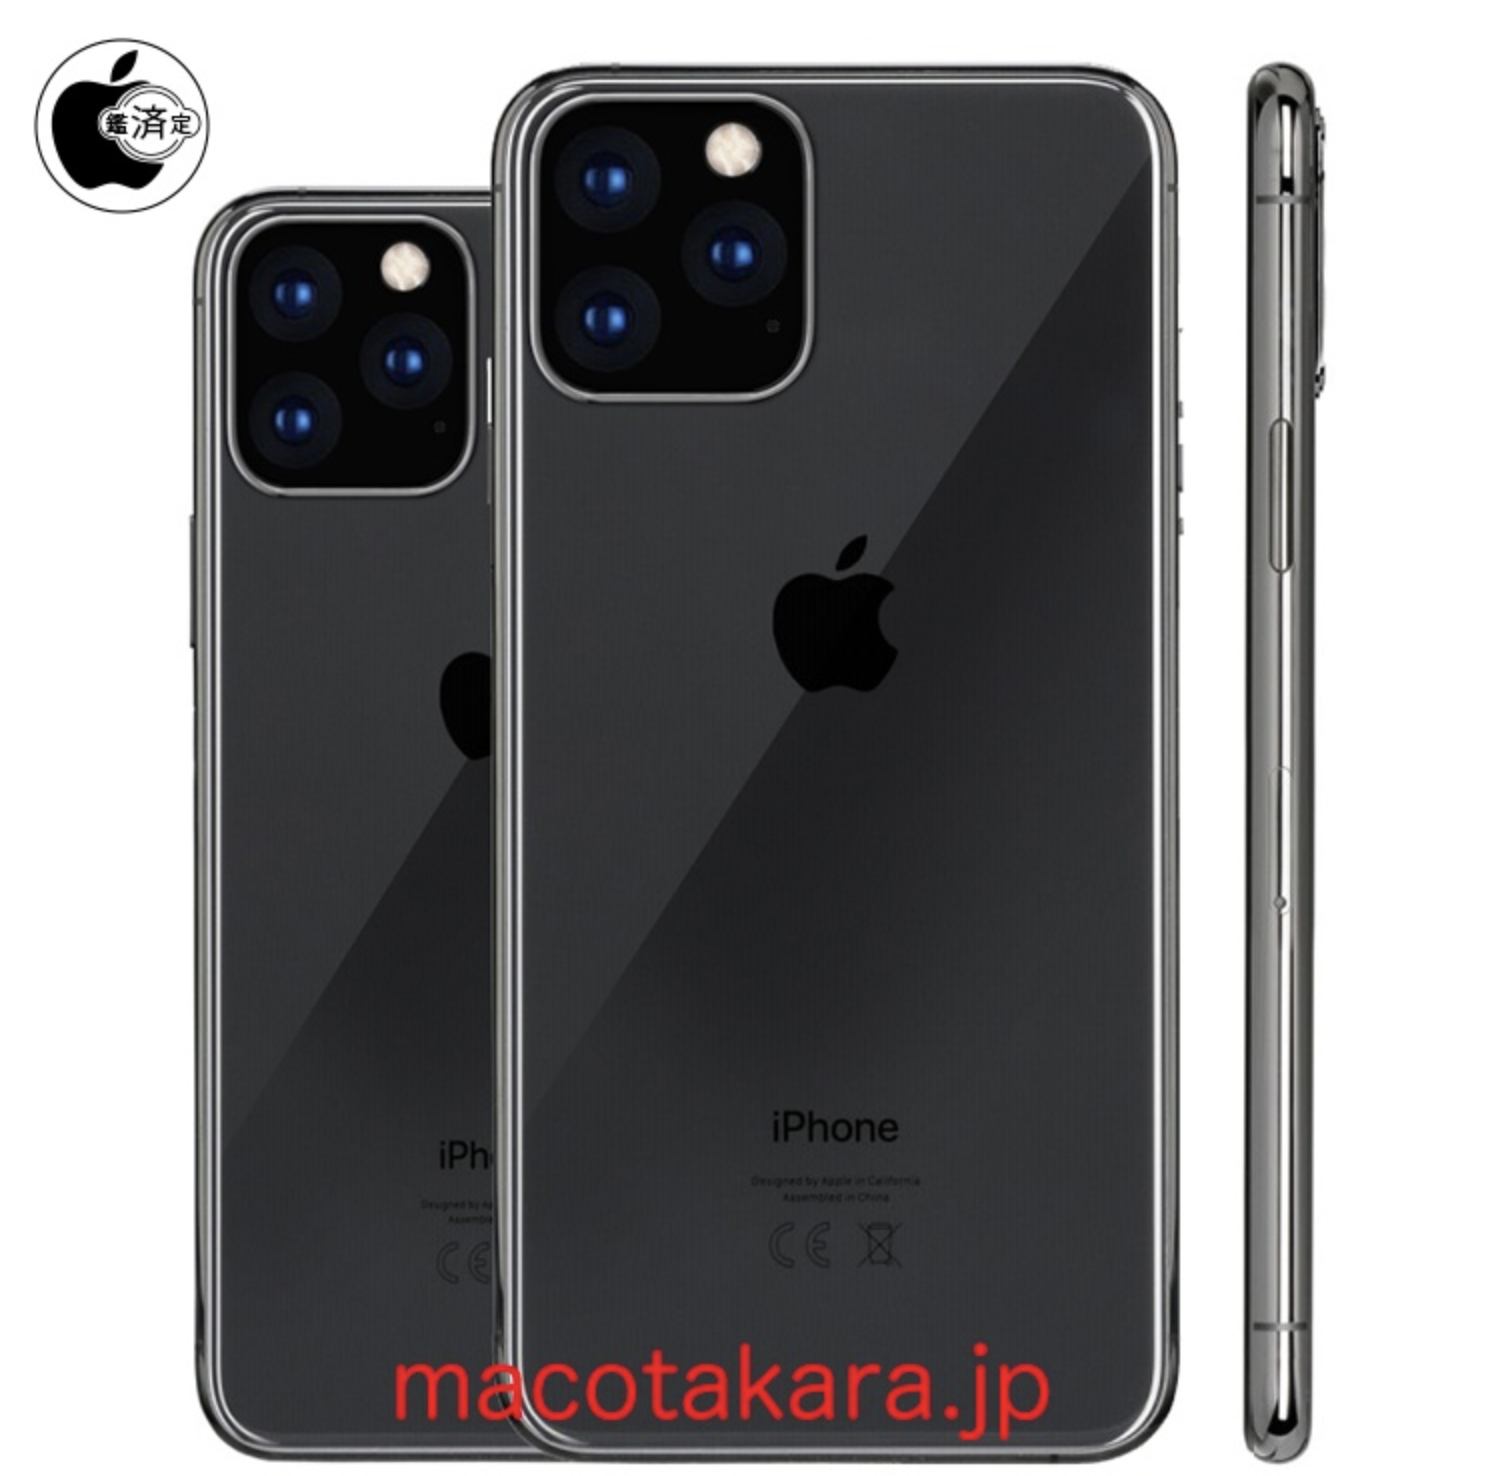 New Apple Iphone 2019 Models